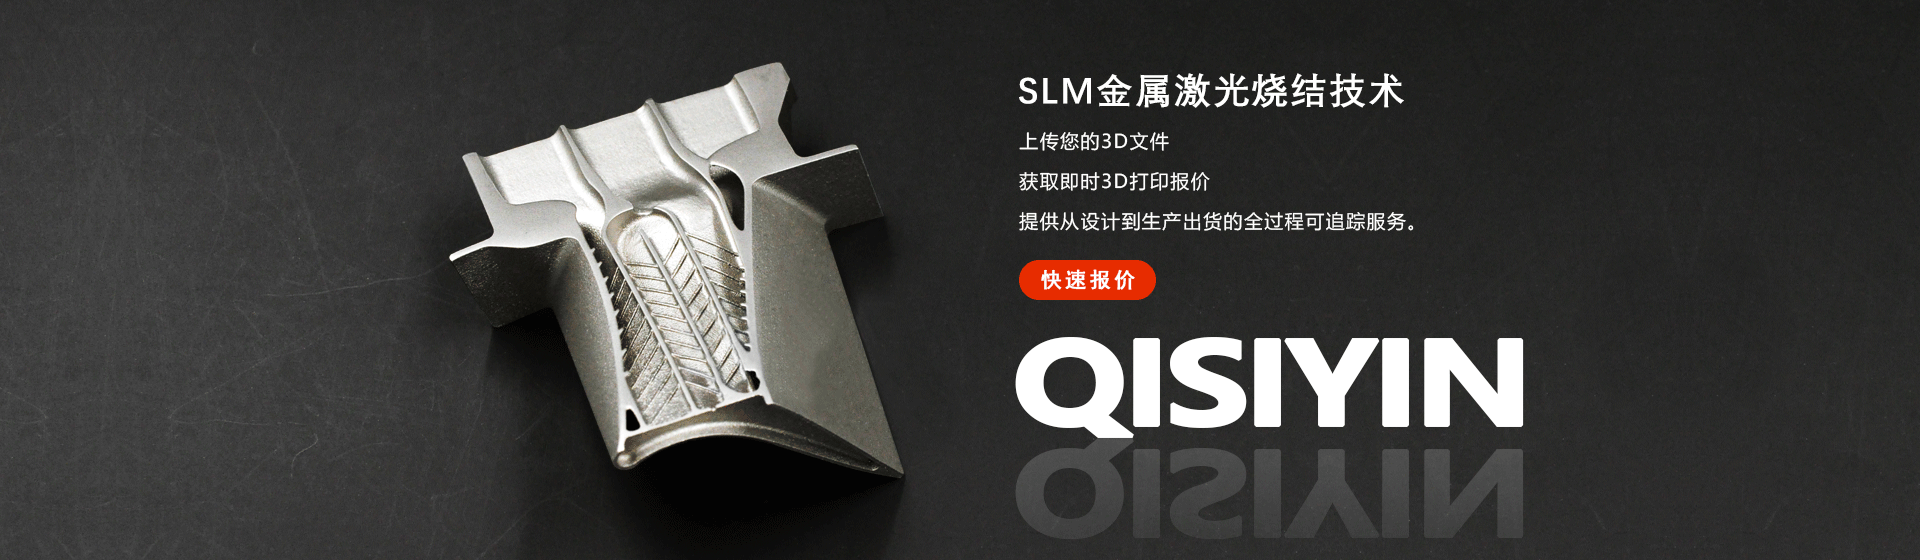 SLM金属激光烧结技术